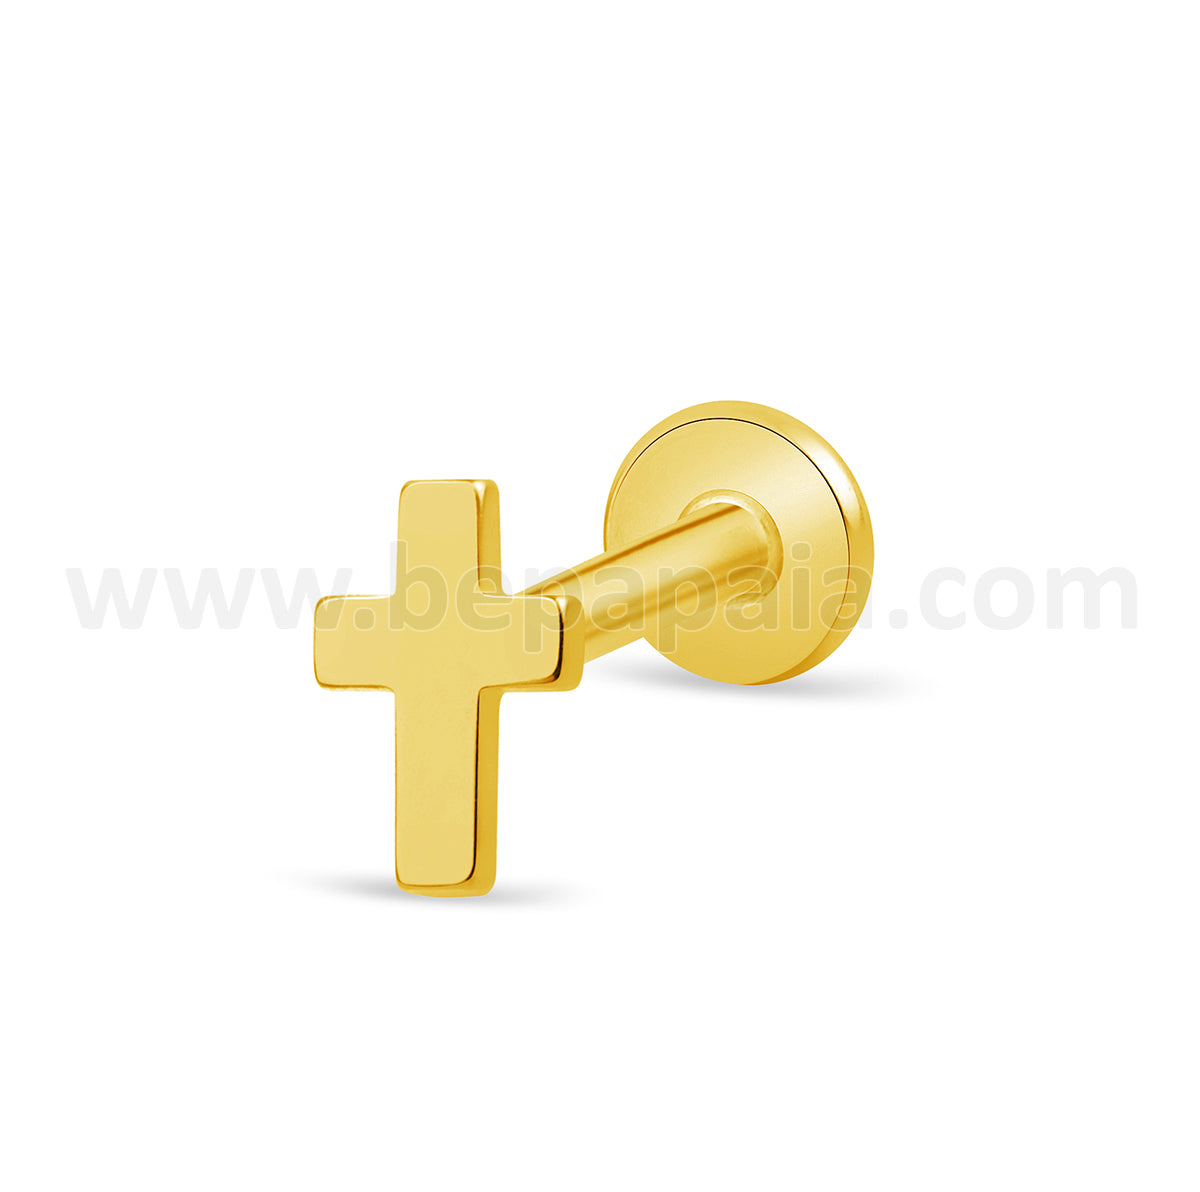 316L surgical steel gold color ear piercing mini designs